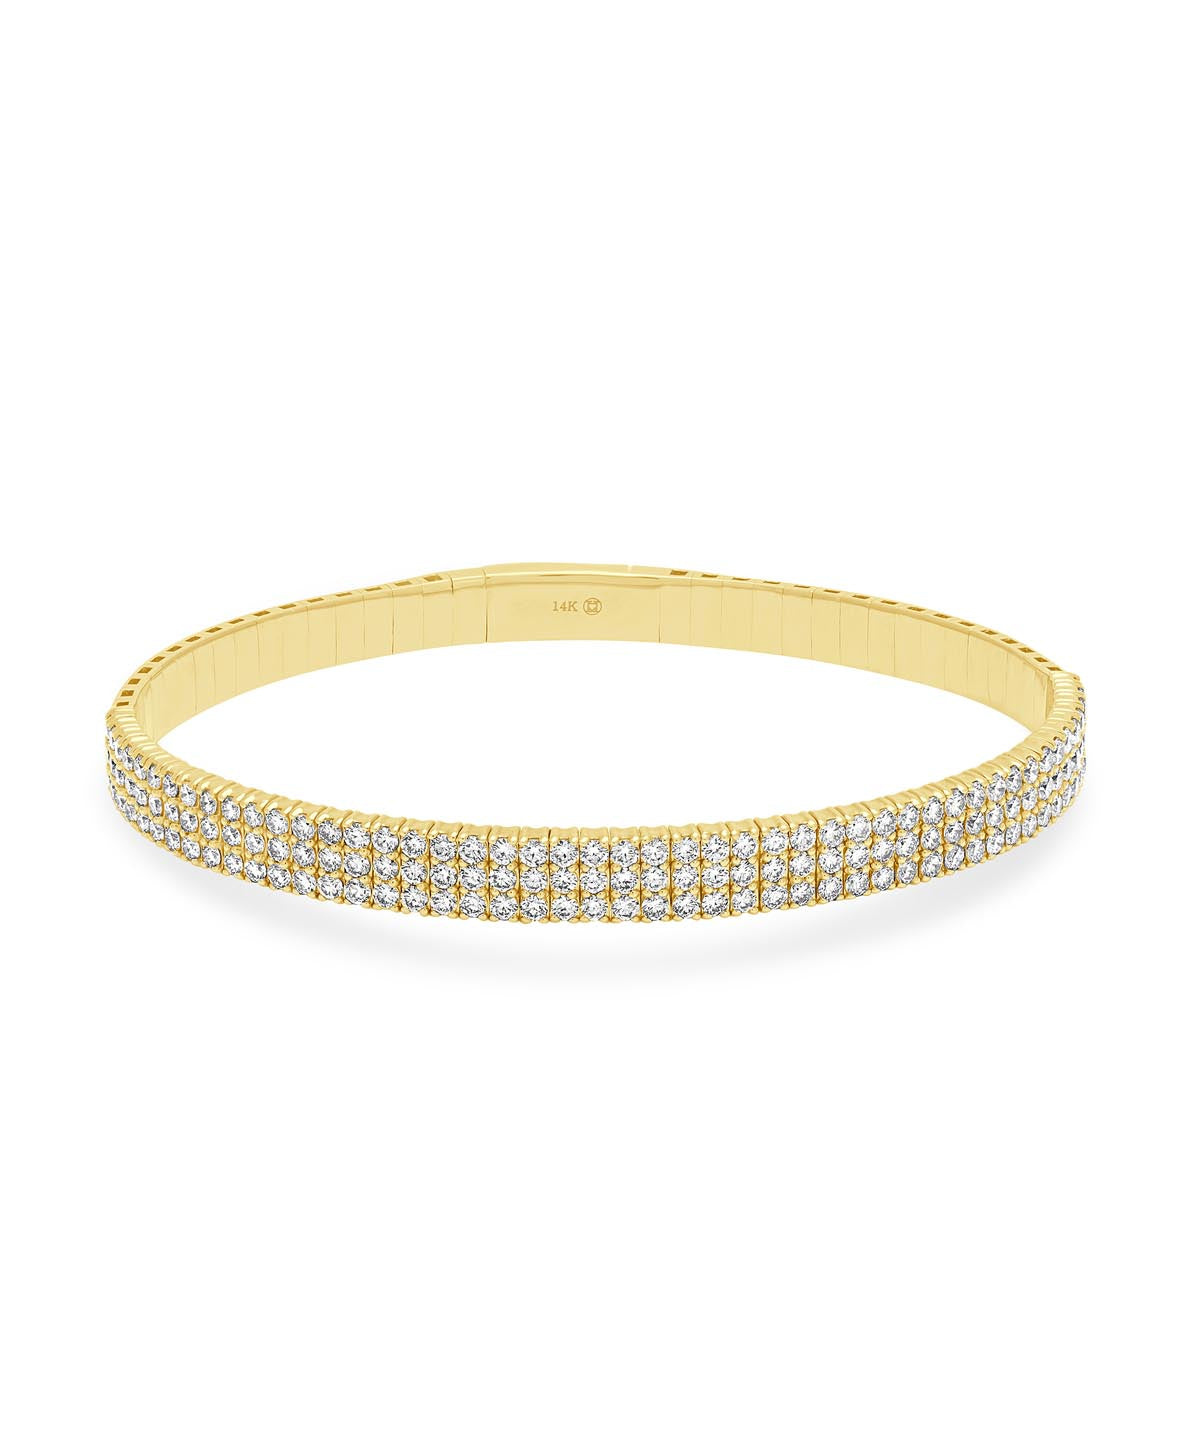 14K Yellow Gold Three Row Diamond Flexible Bangle Bracelet